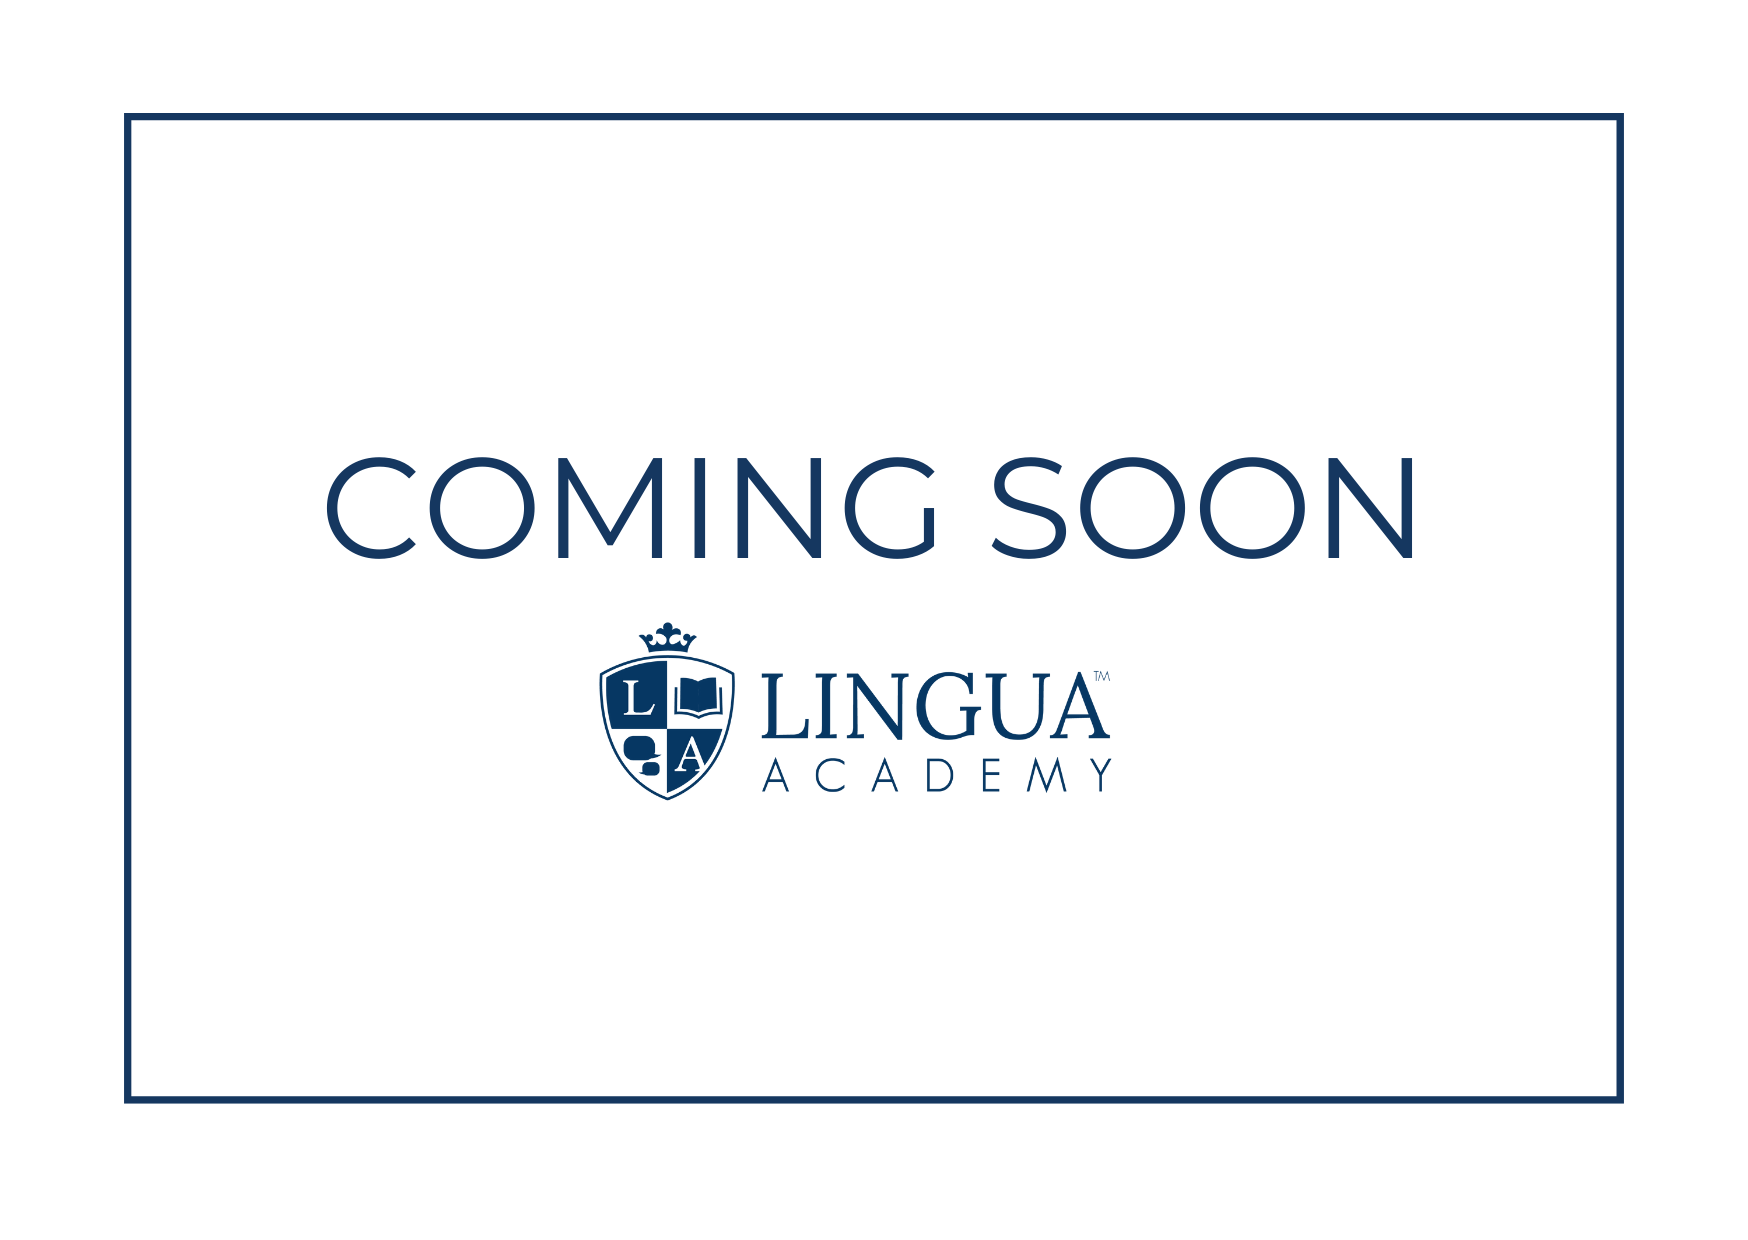 Coming soon Lingua Academy